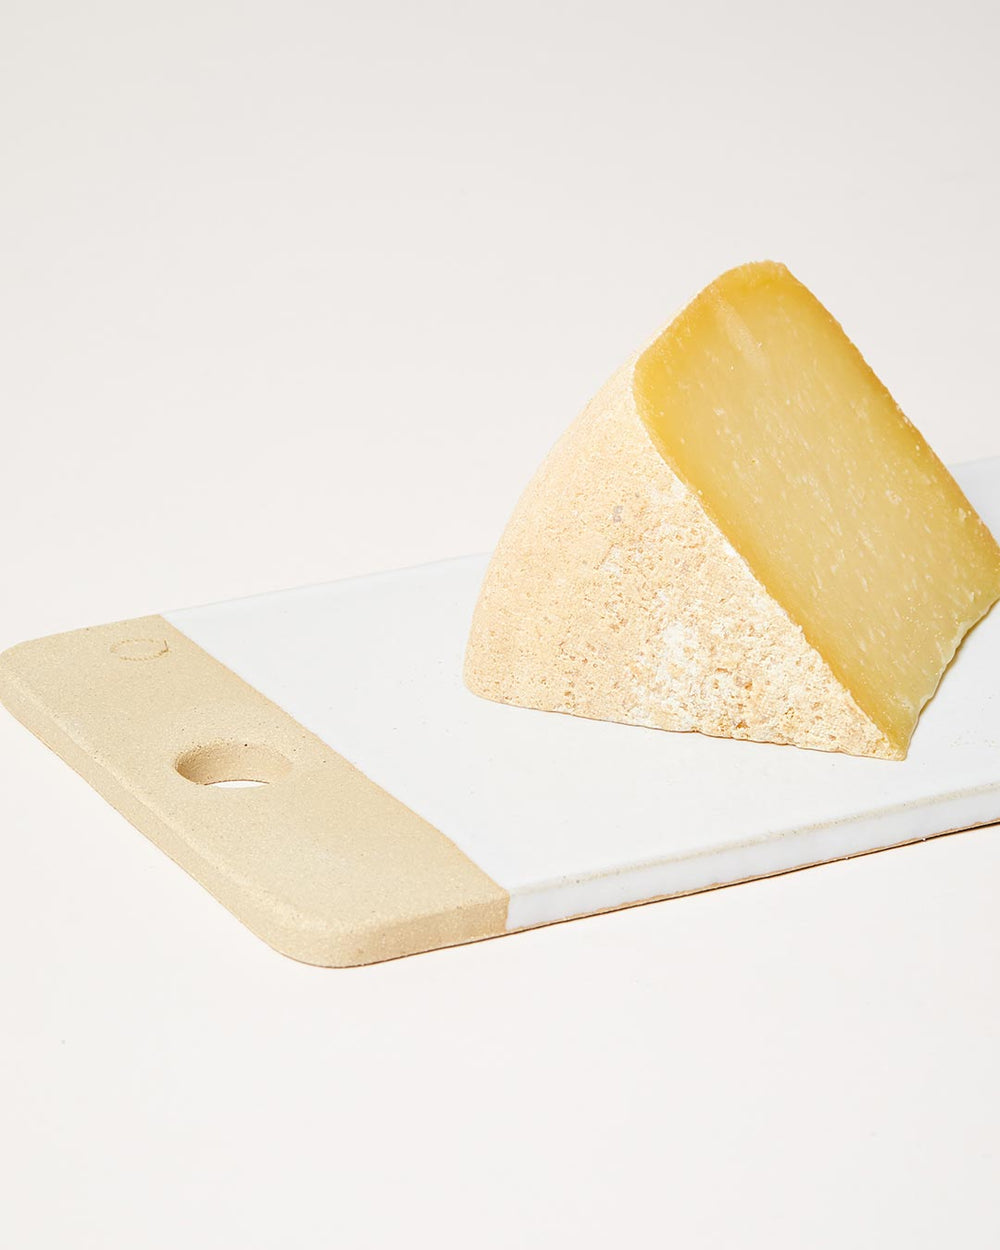 Large Cutting Board  Keystone Farms Cheese